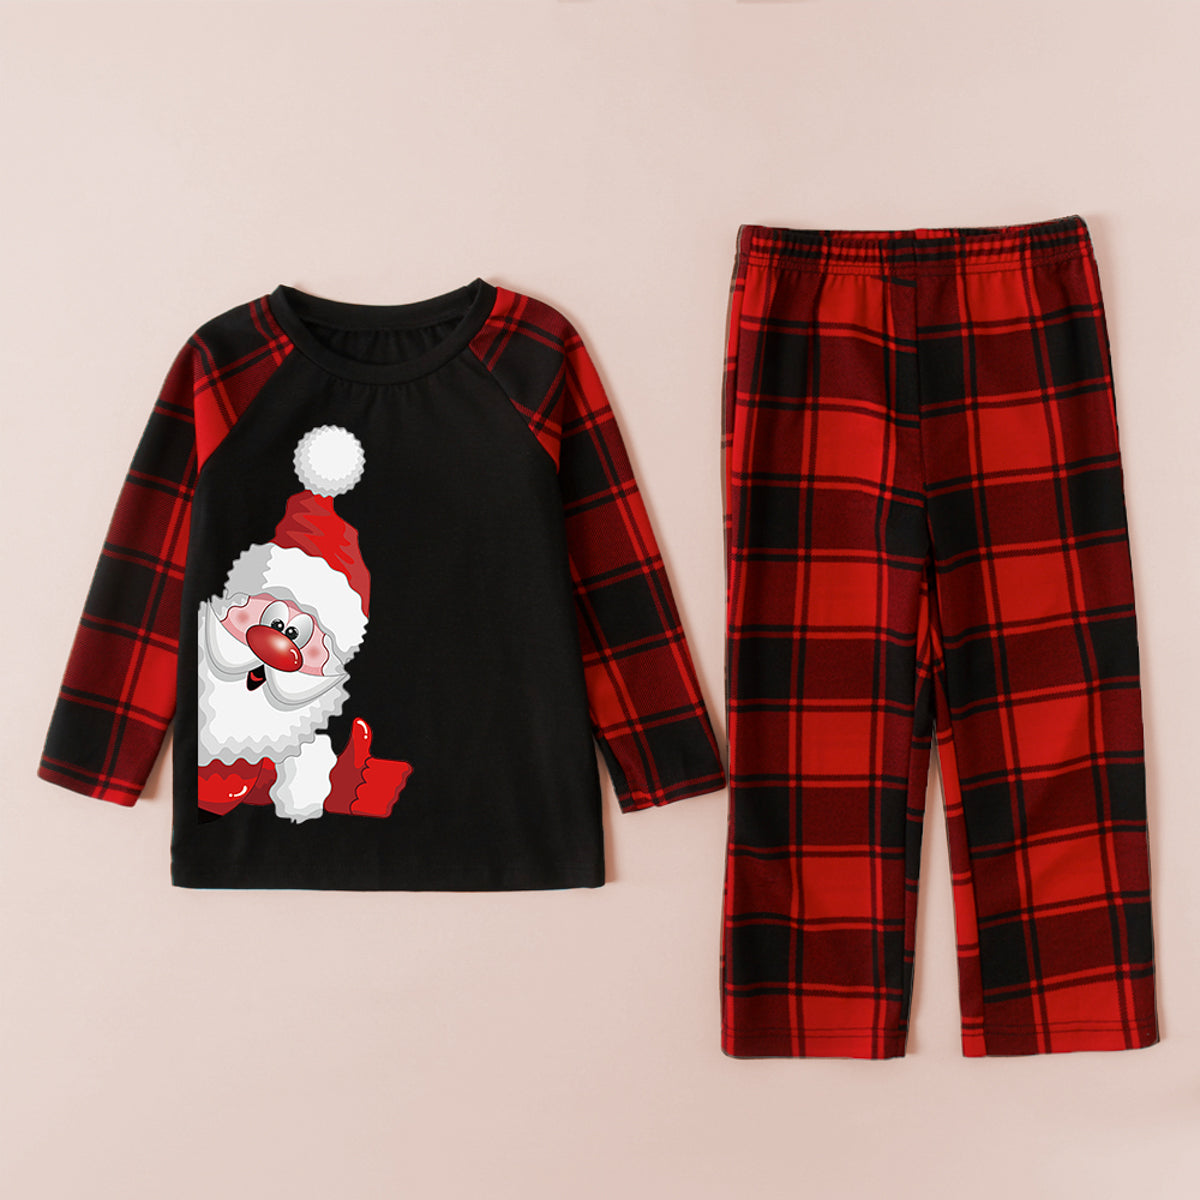 Santa Graphic Top and Plaid Pants Set